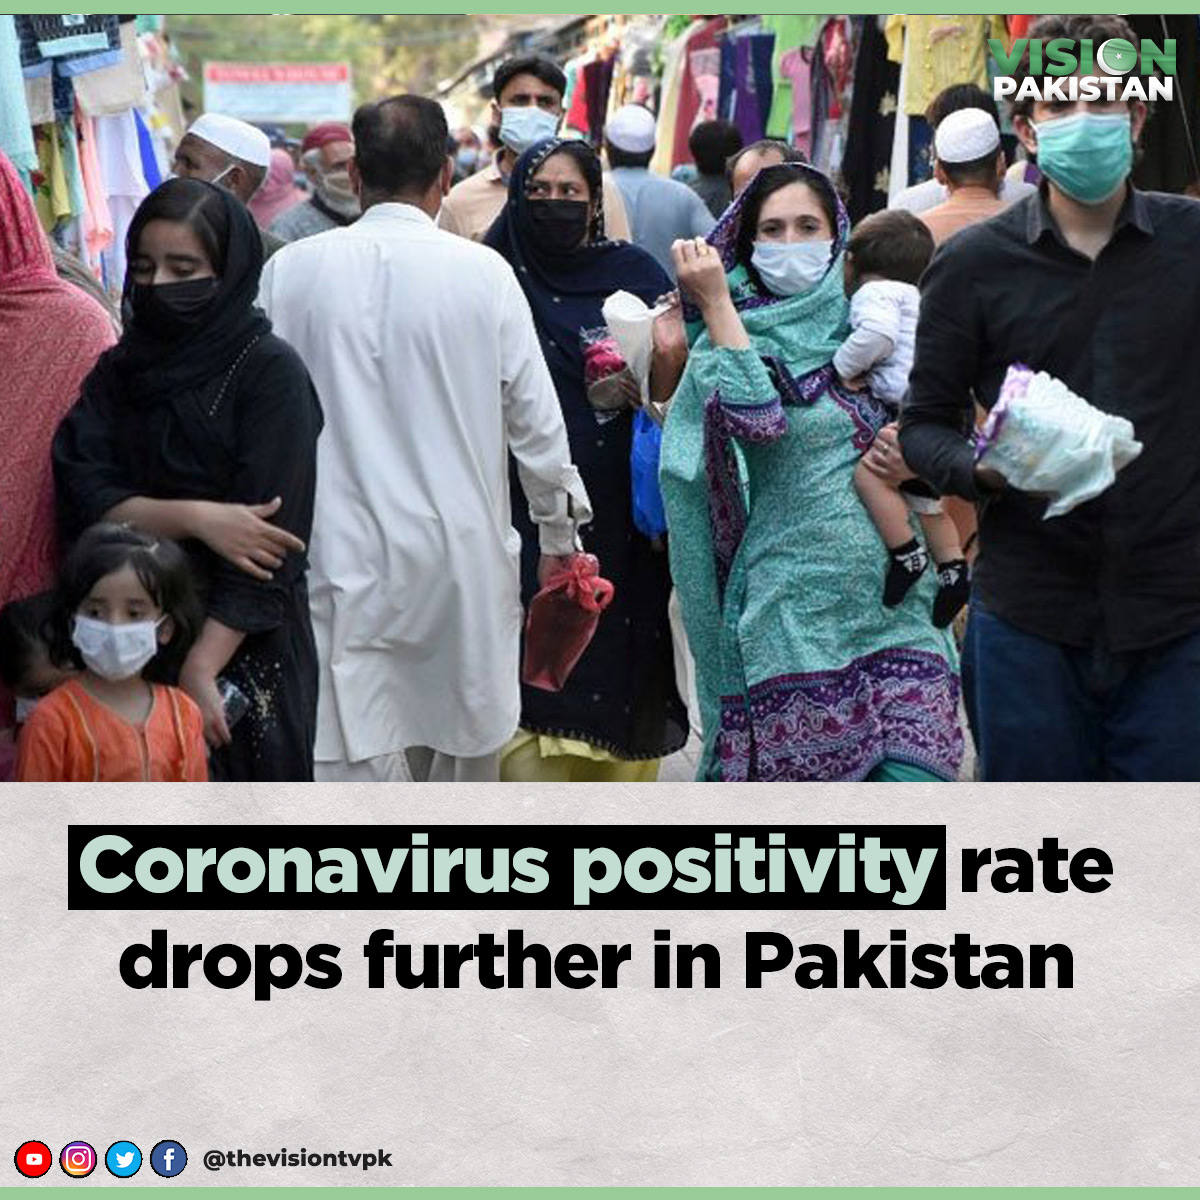 Coronavirus positivity rate drops further in Pakistan 

#Coronavirus #COVID19 #OmicronVarient #Pakistan